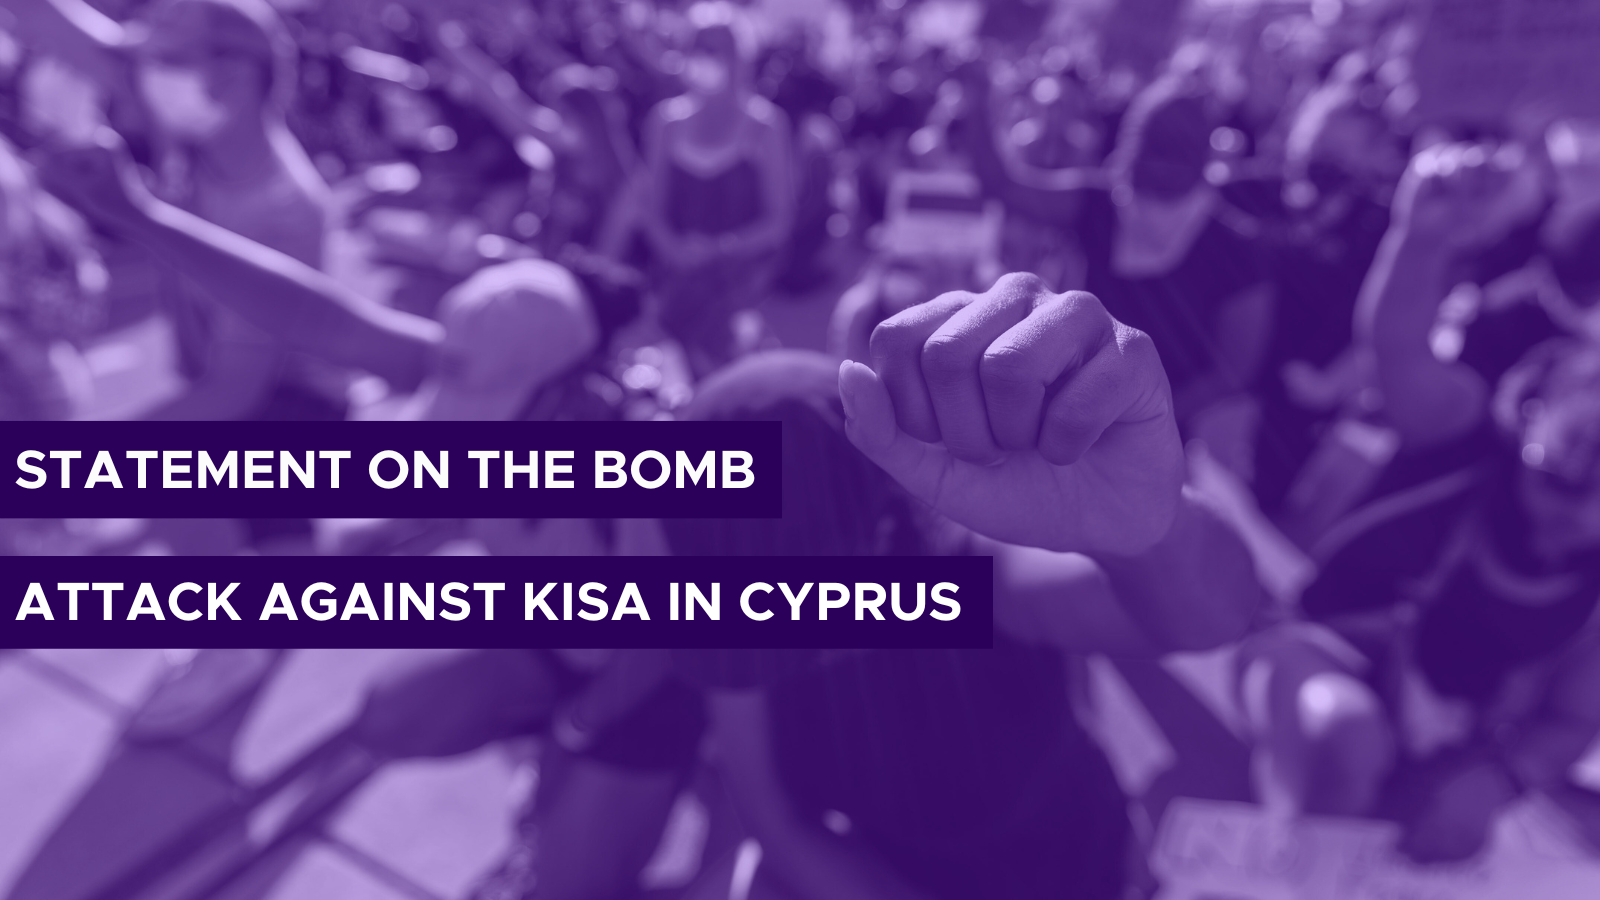 ENAR press statement on the bomb attack against ENAR member KISA in Cyprus